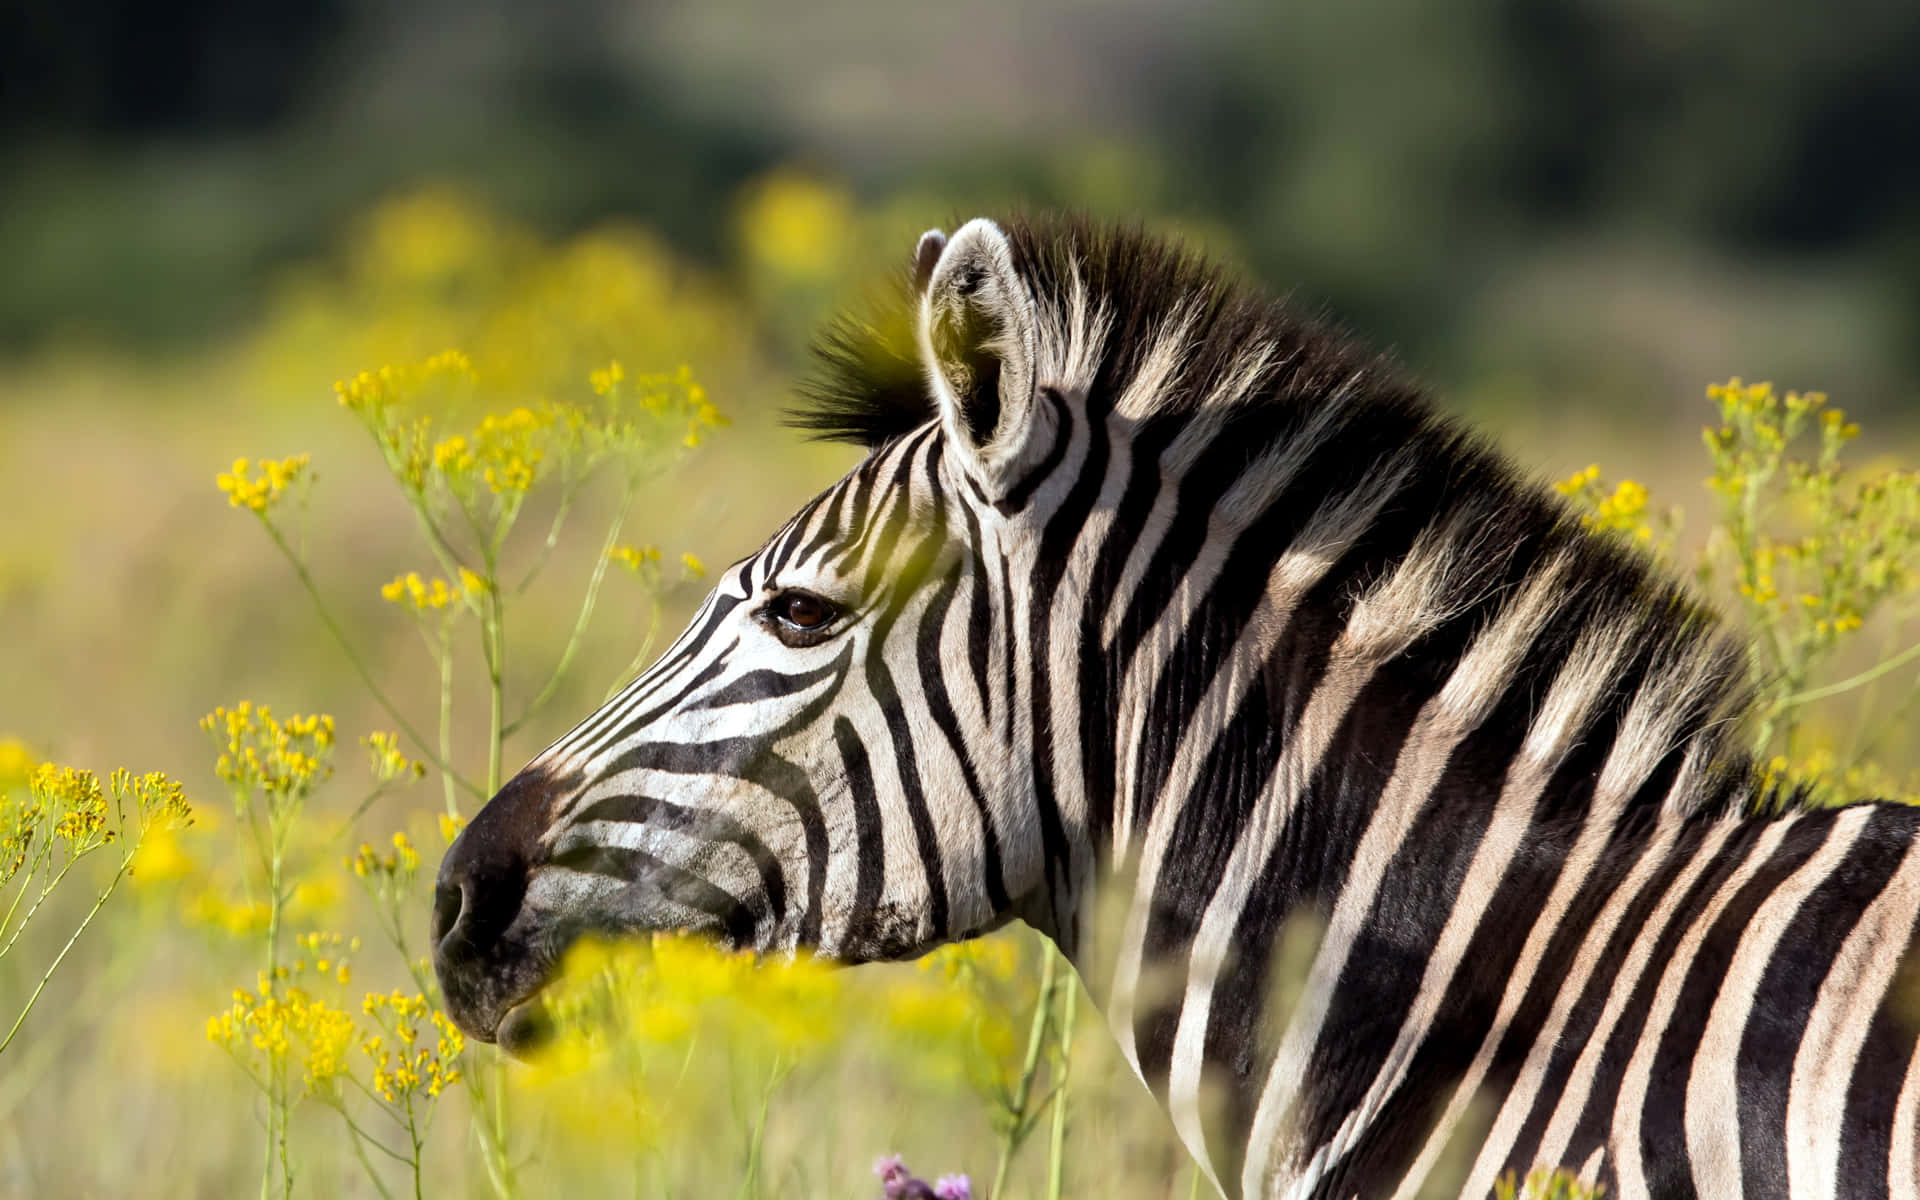 Fotode Uma Zebra Majestosa Em Seu Habitat Natural.